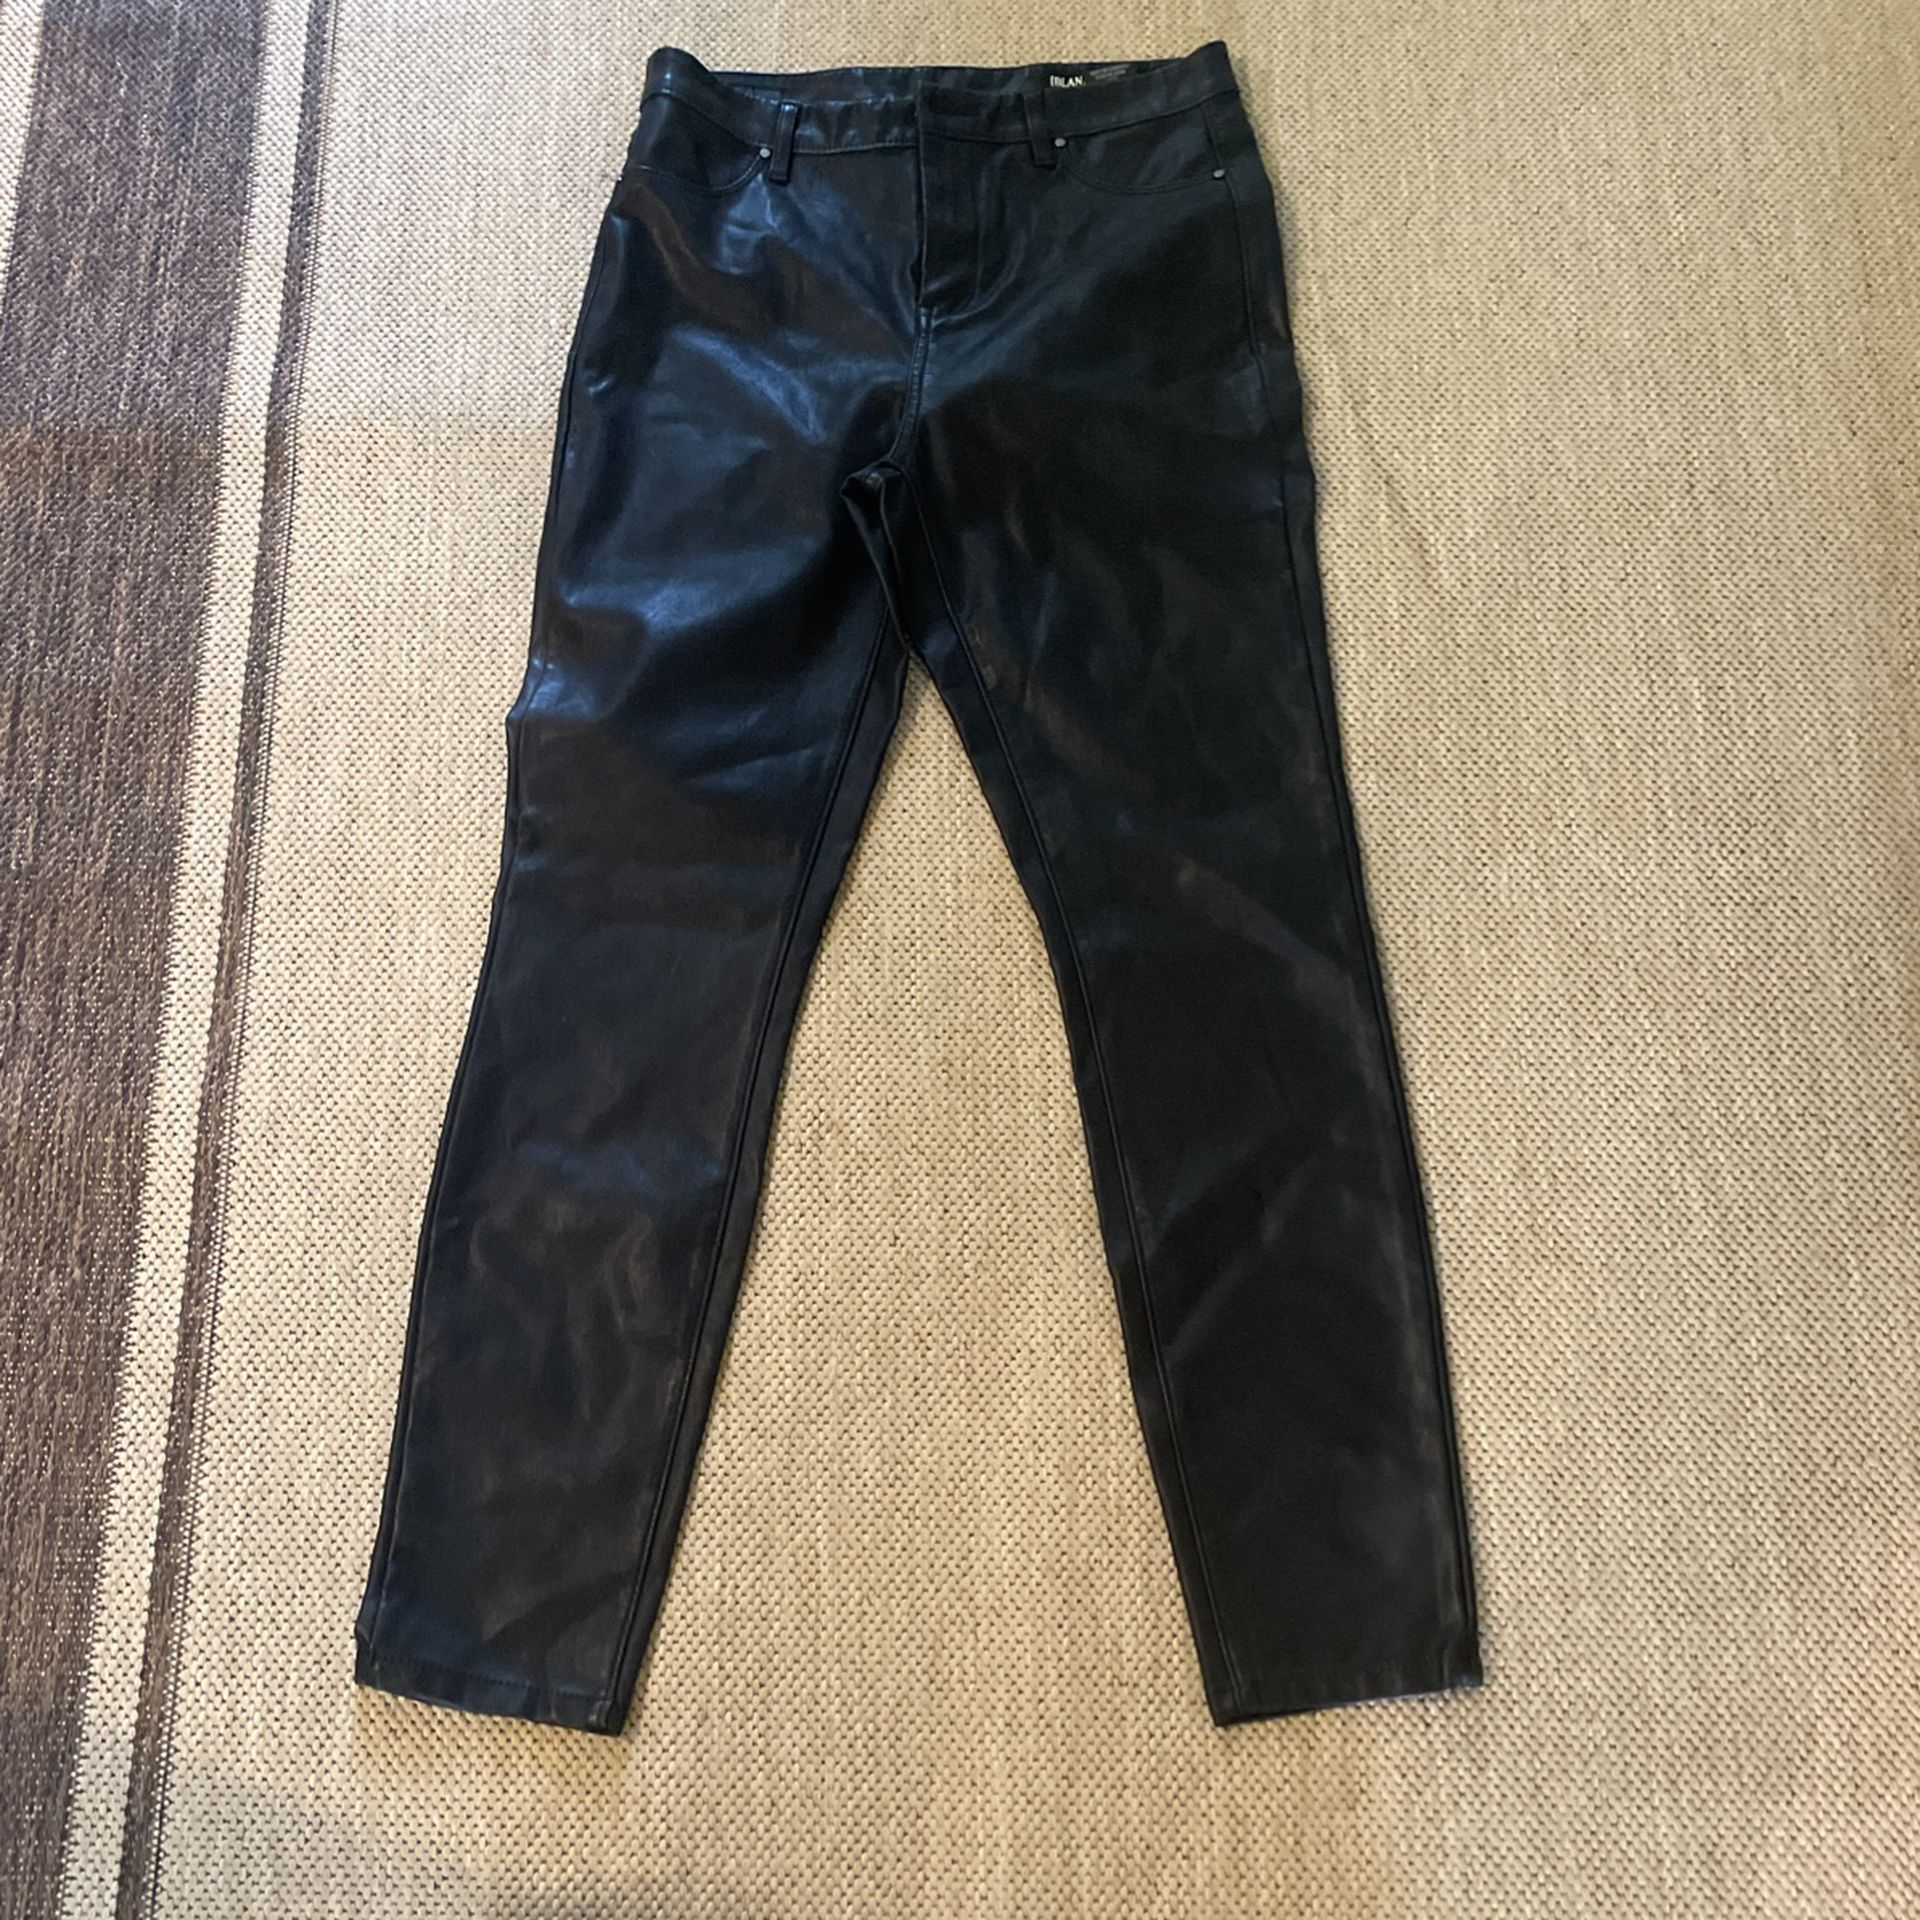 Blanknyc Faux Leather Jeans